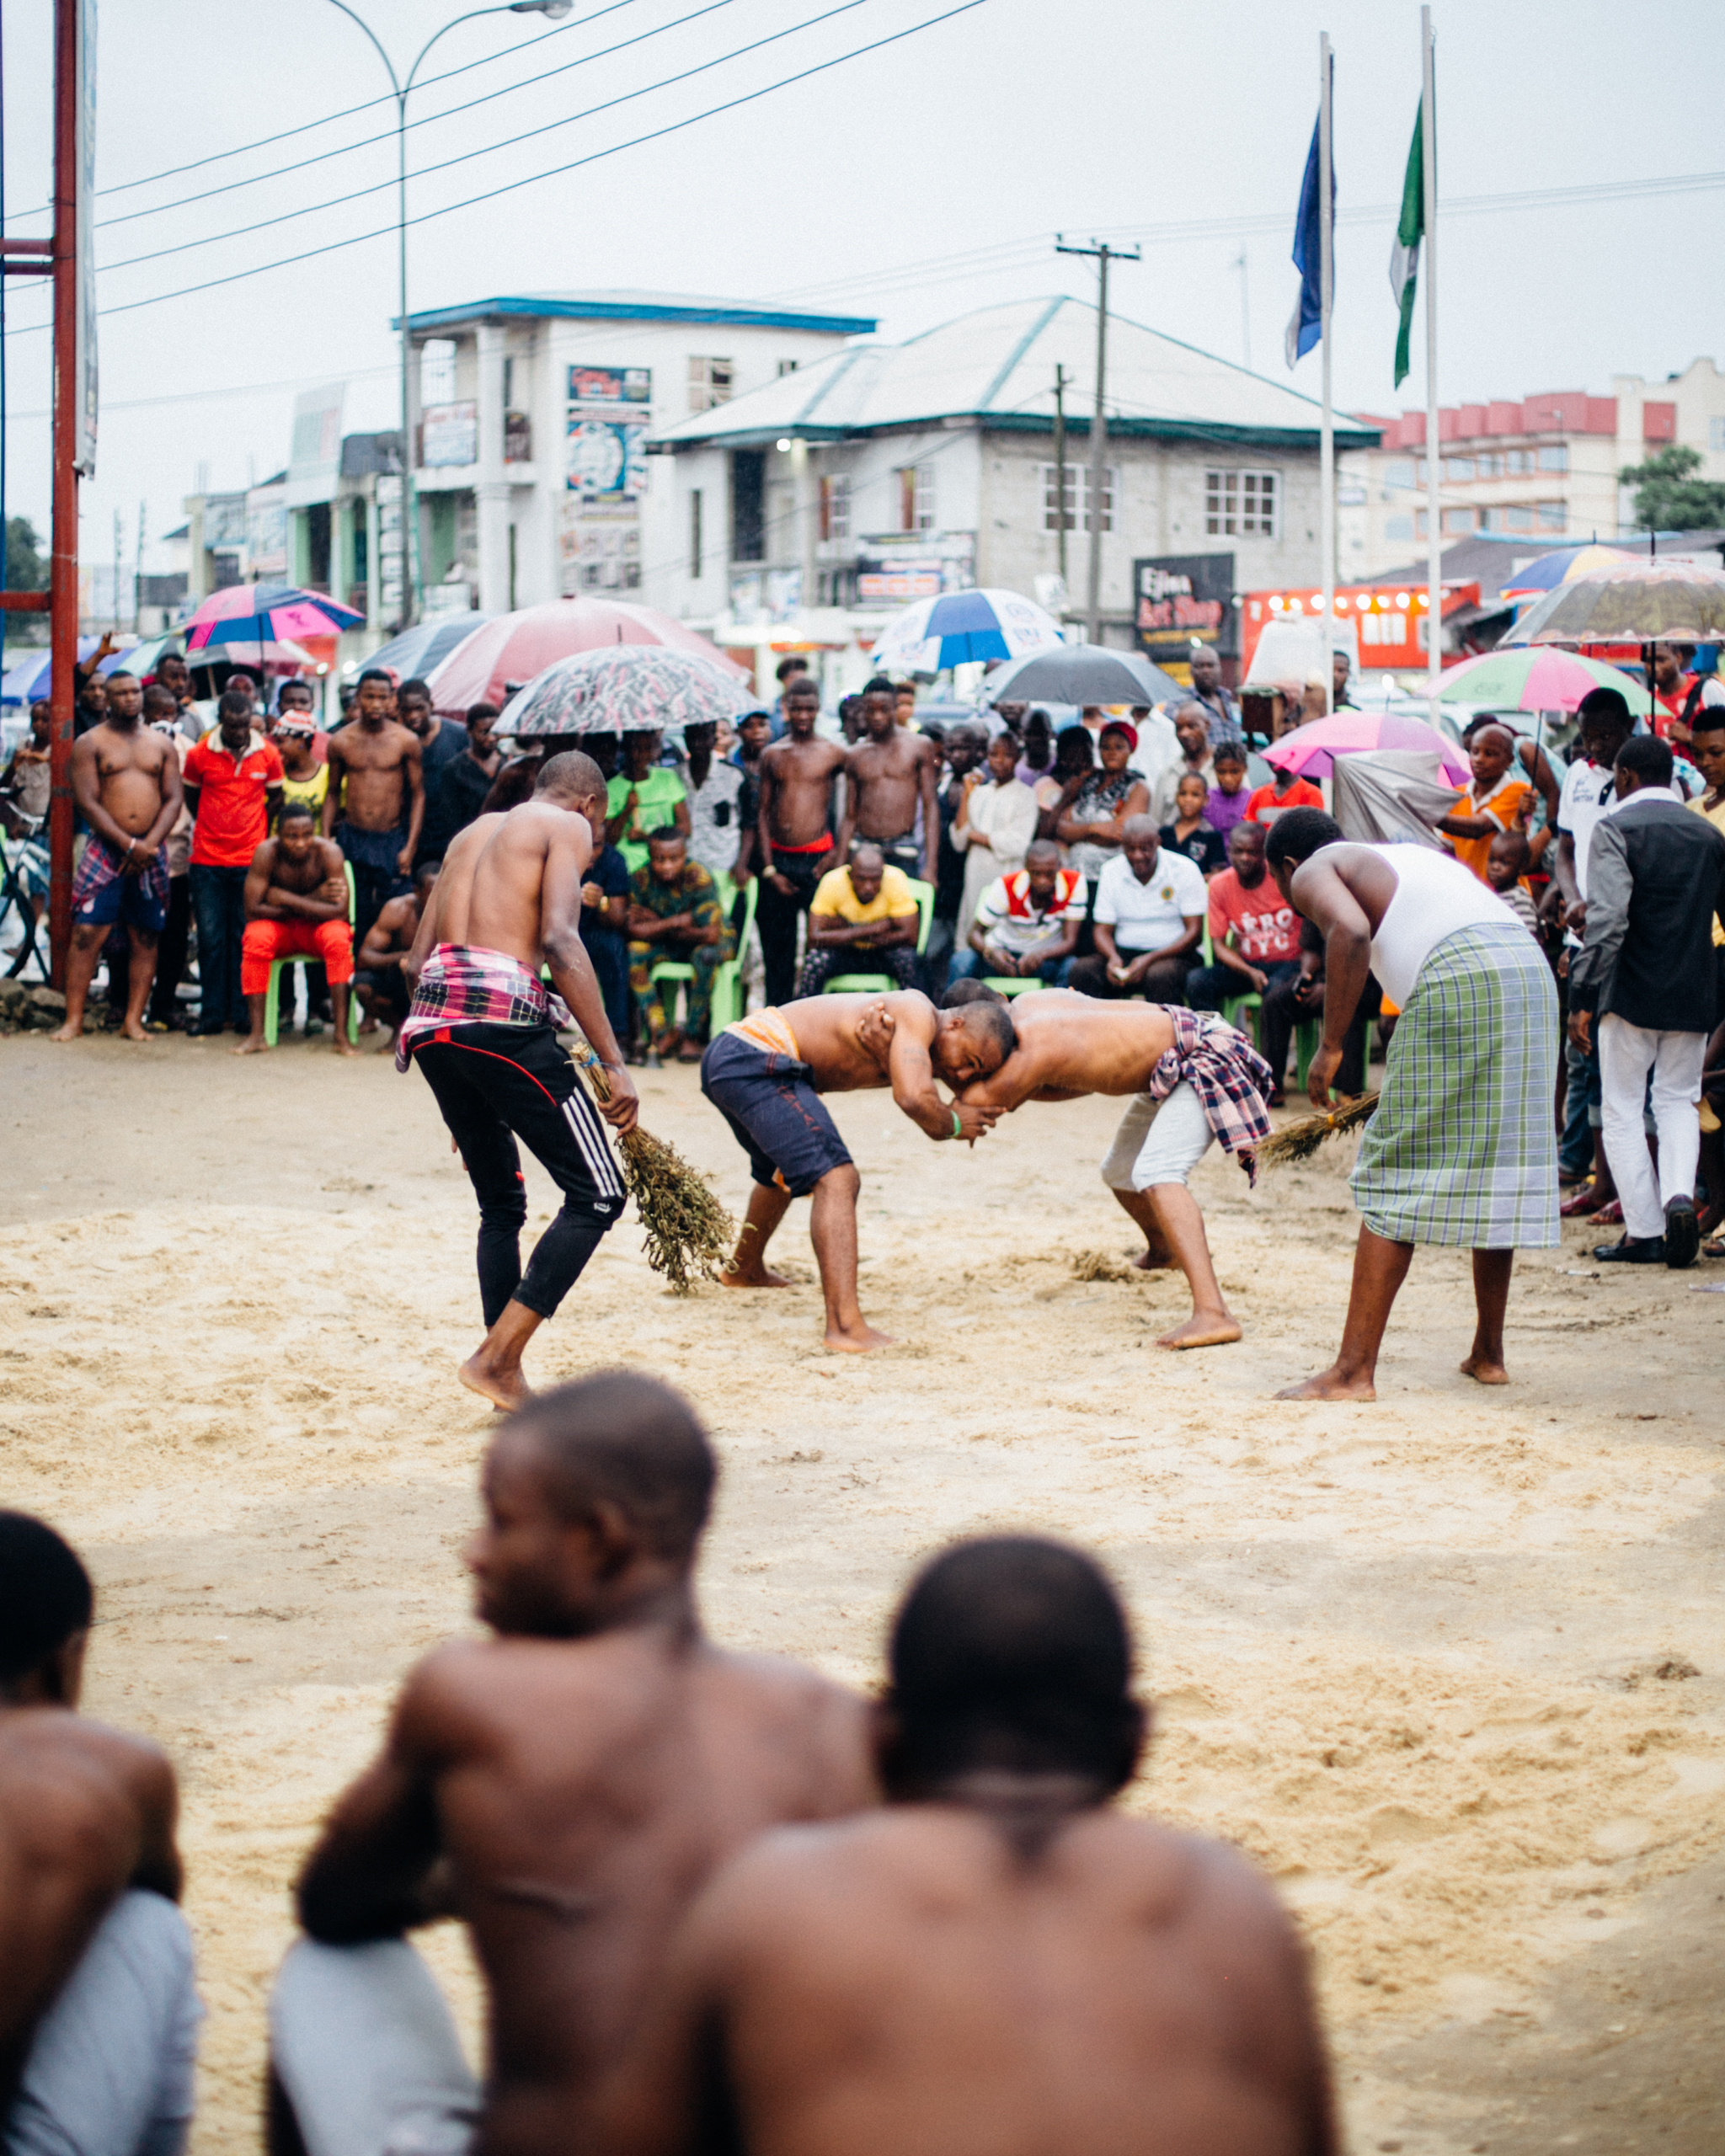 Wrestlers, Egelege Festival, Rumuola, Port Harcourt